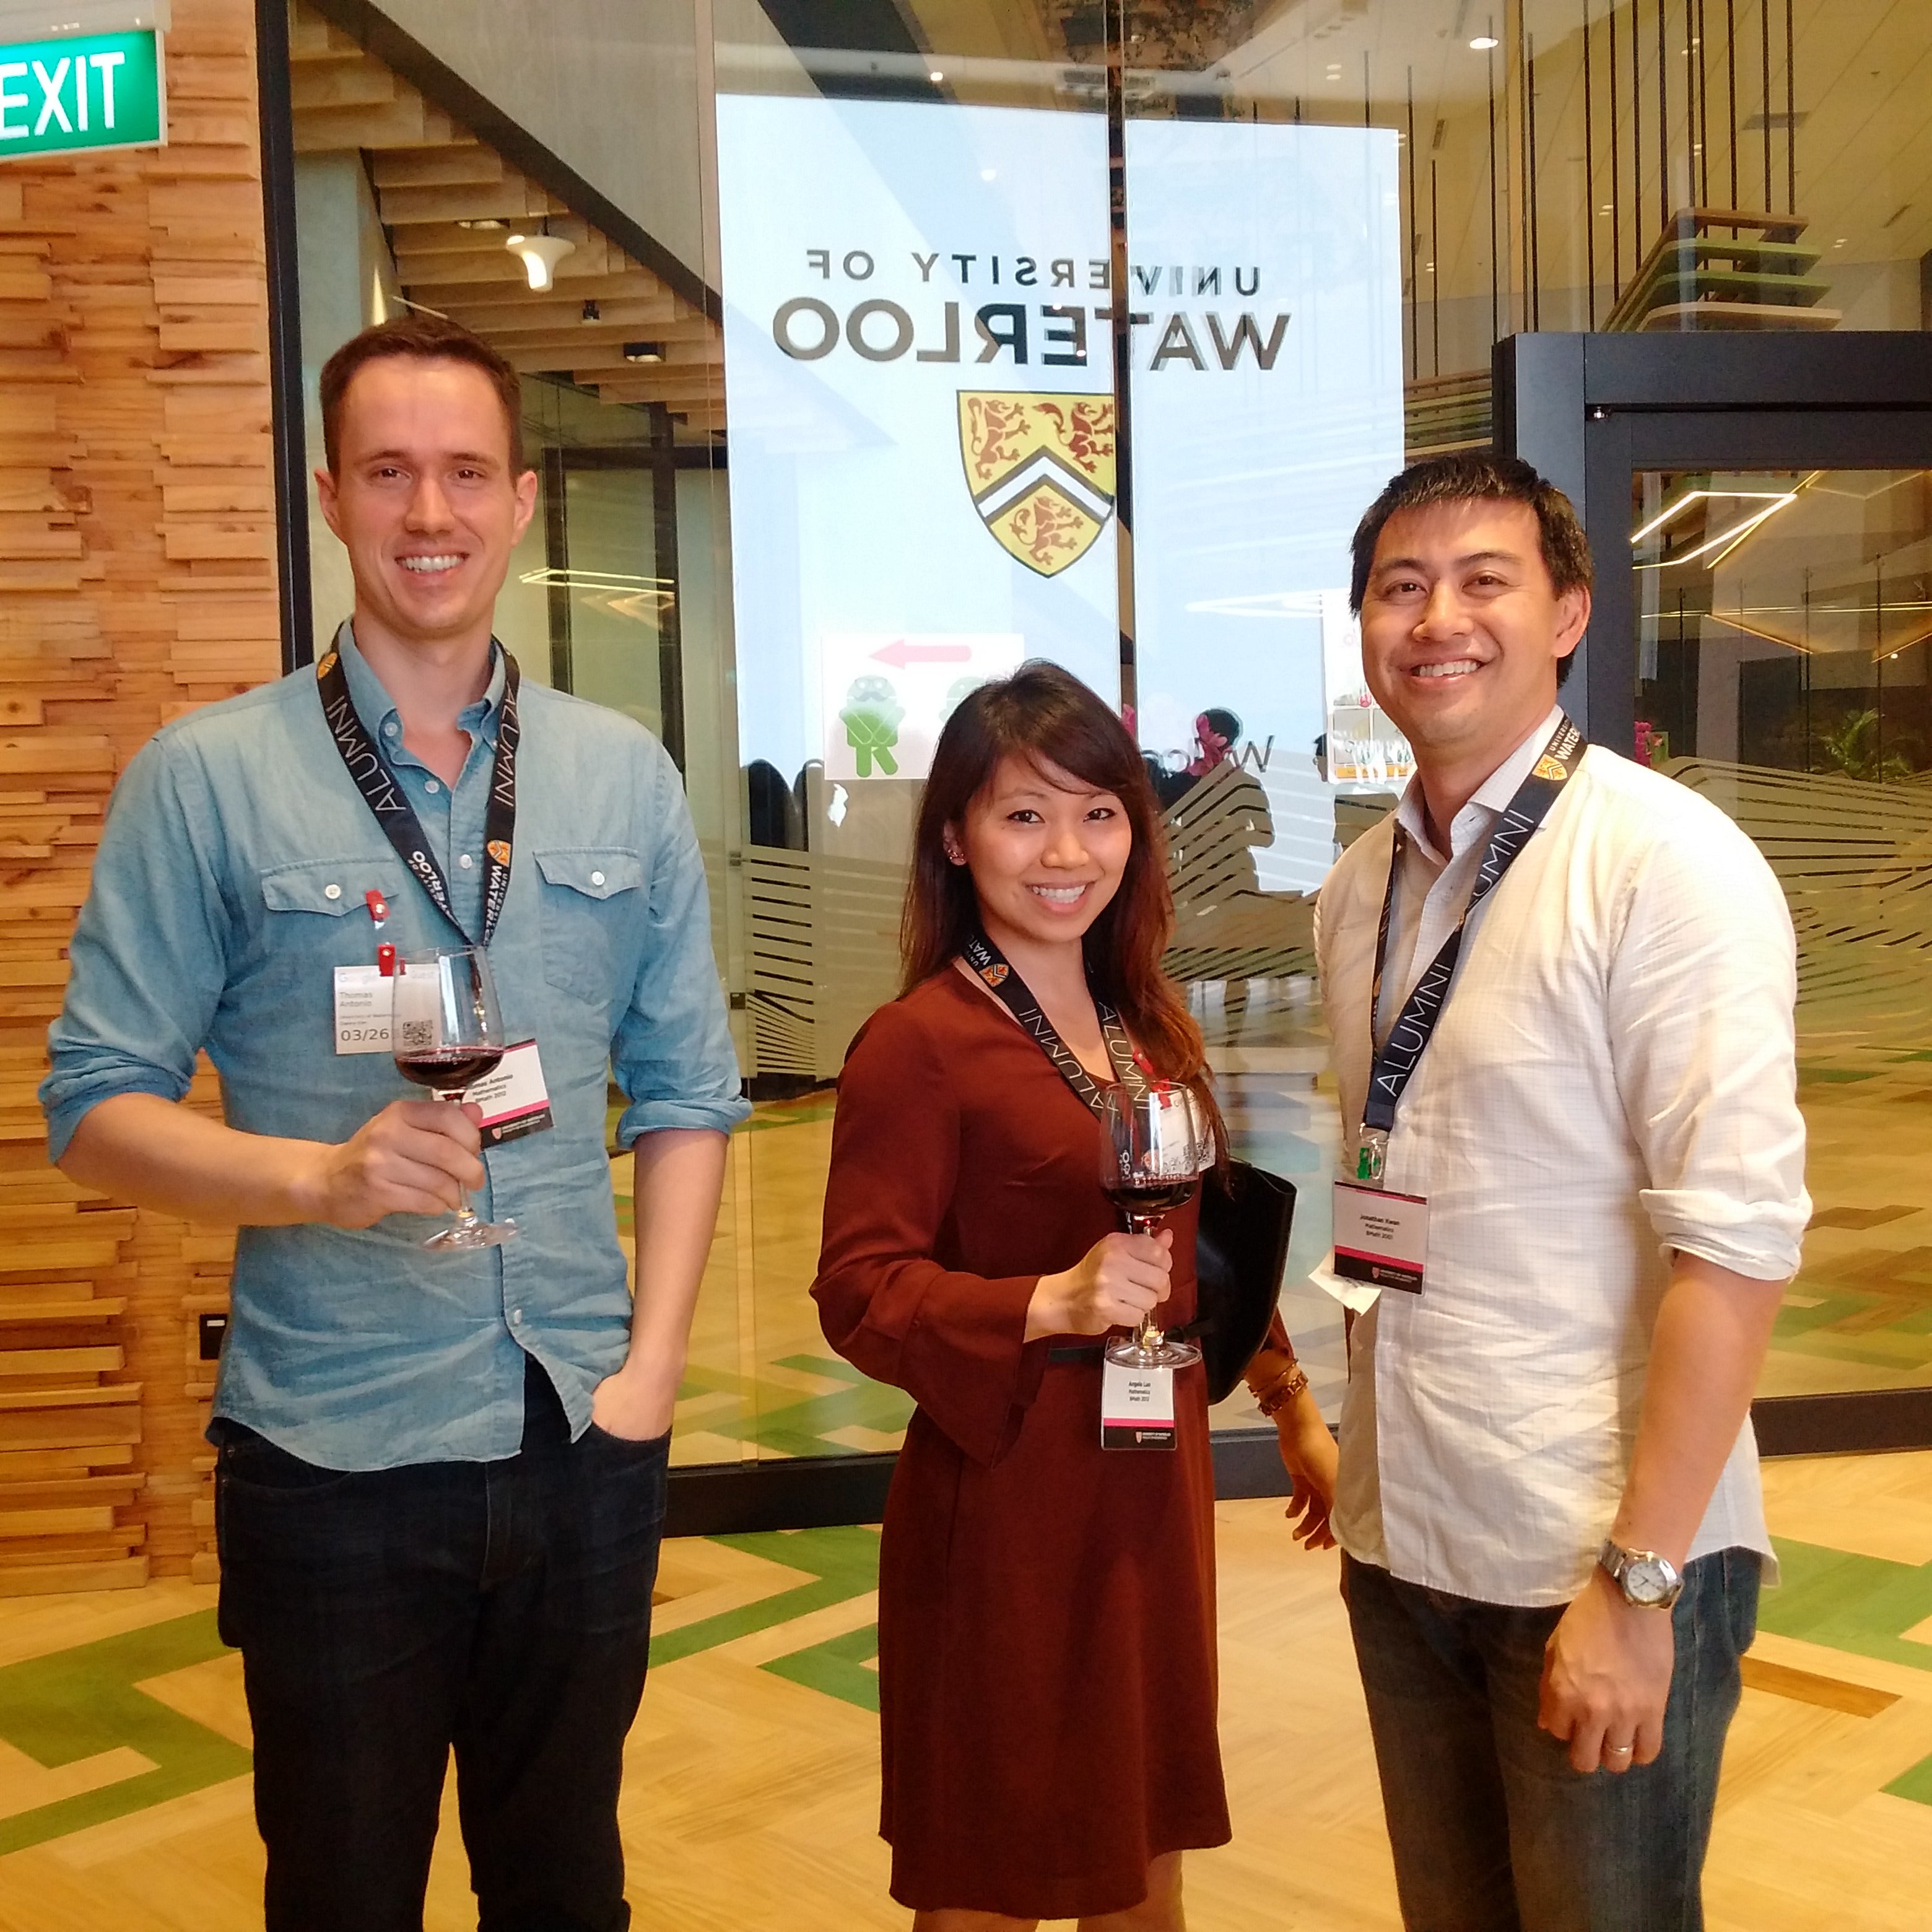 Jon Kwan (right) and fellow alumni at the Waterloo Singapore event.